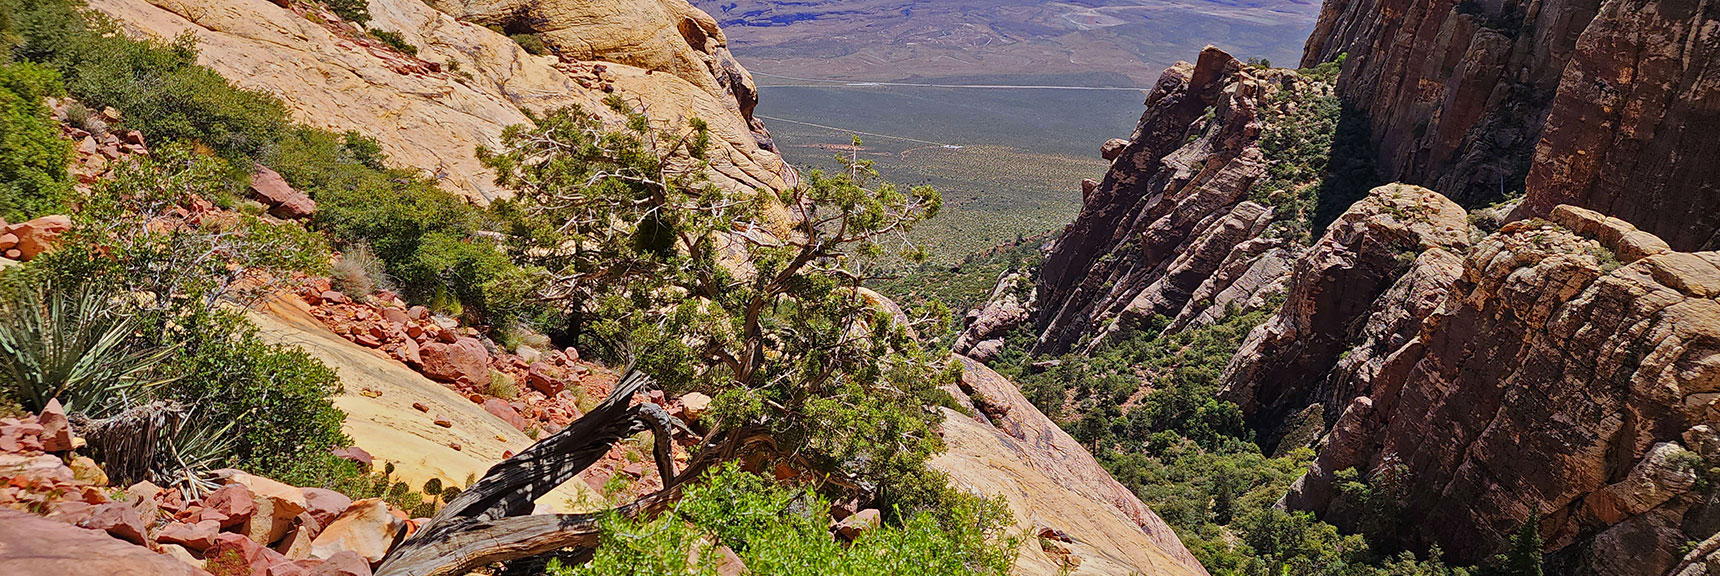 View Back to Sandstone Ledge, Drop-Off and Juniper Canyon Opening | Juniper Peak Summit | Rainbow Mountain Wilderness, Nevada | David Smith, LasVegasAreaTrails.com